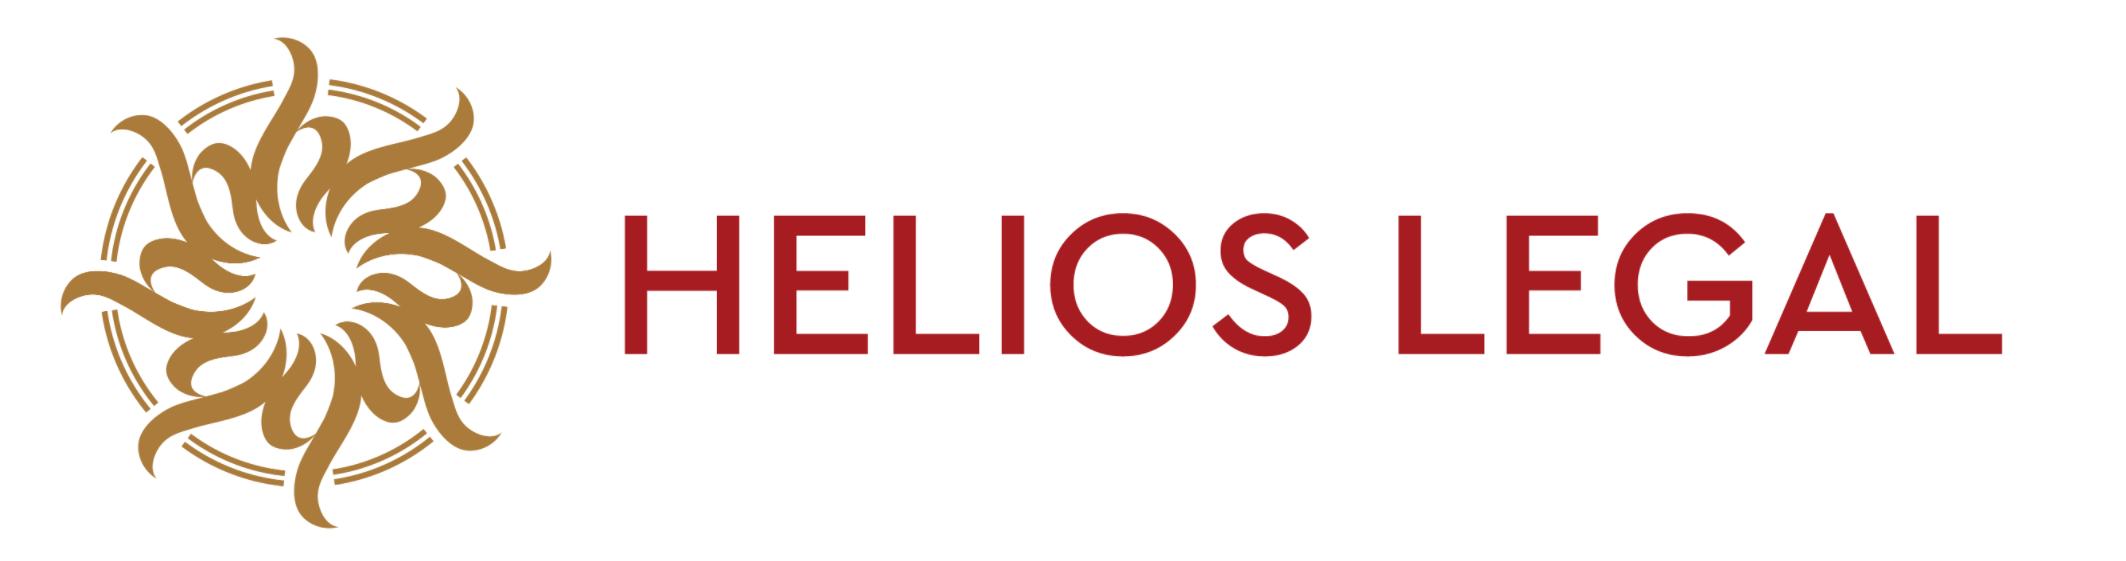 The Helios Legal